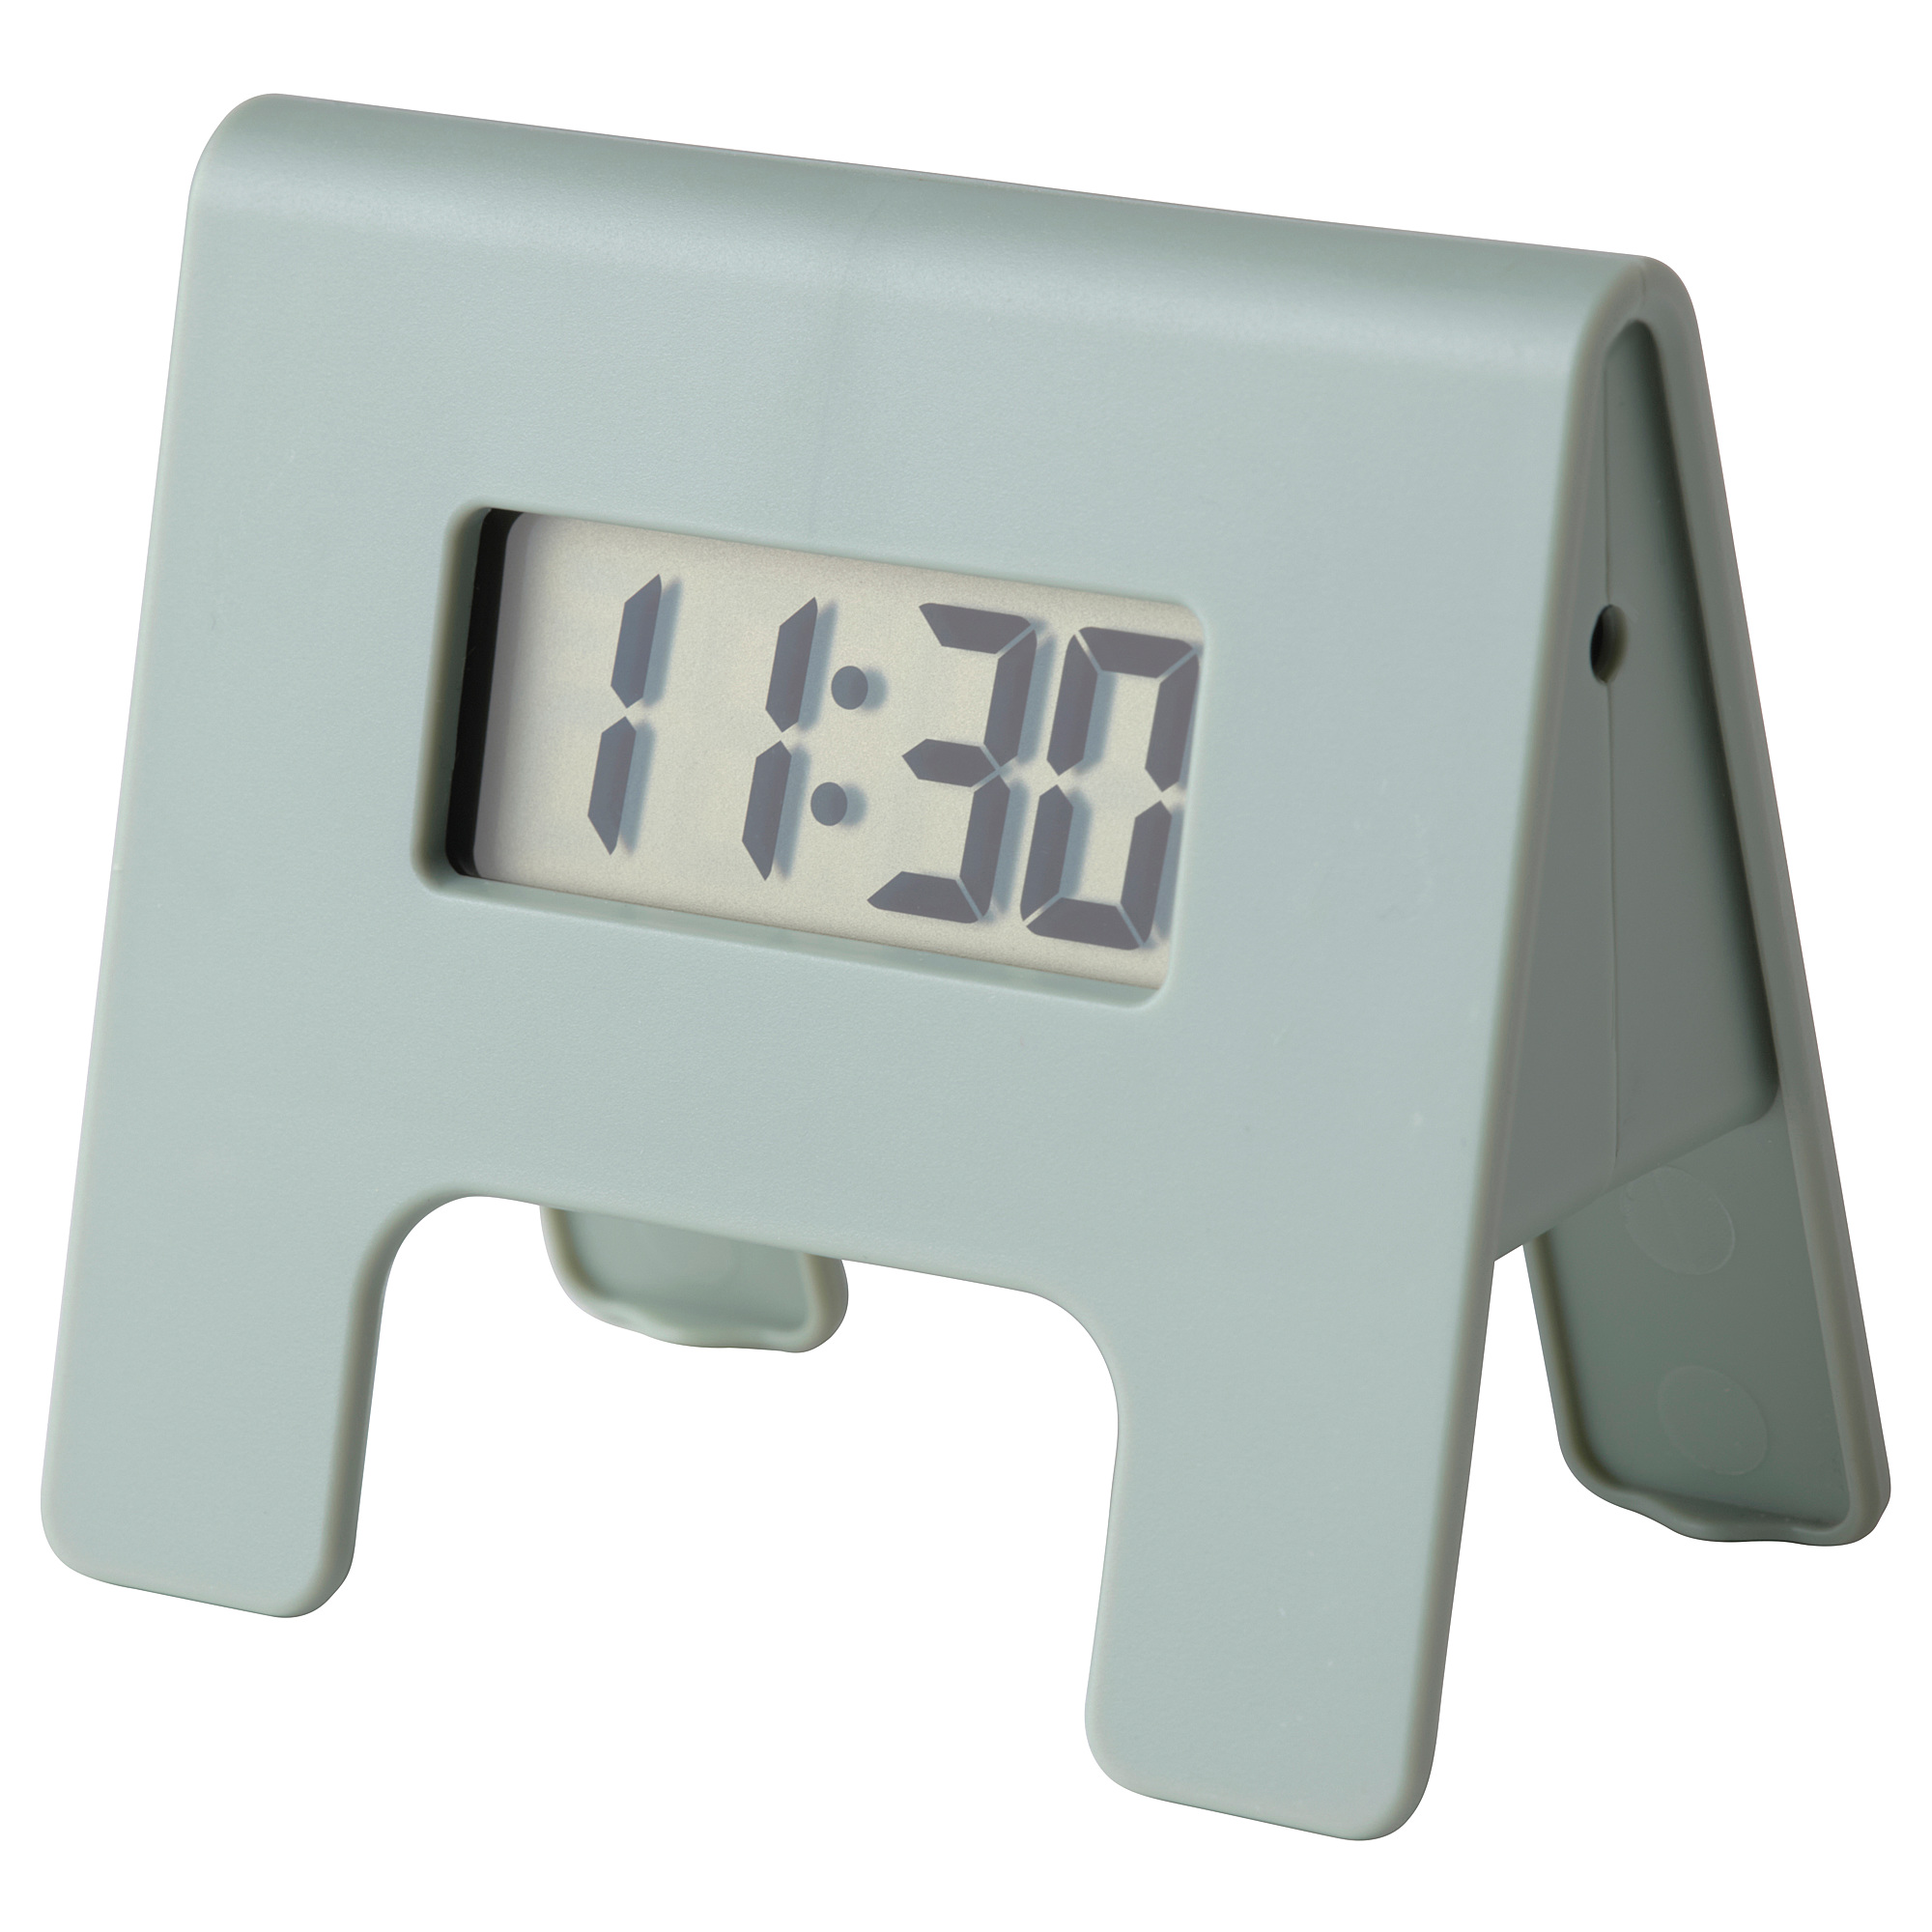 KUPONG alarm clock